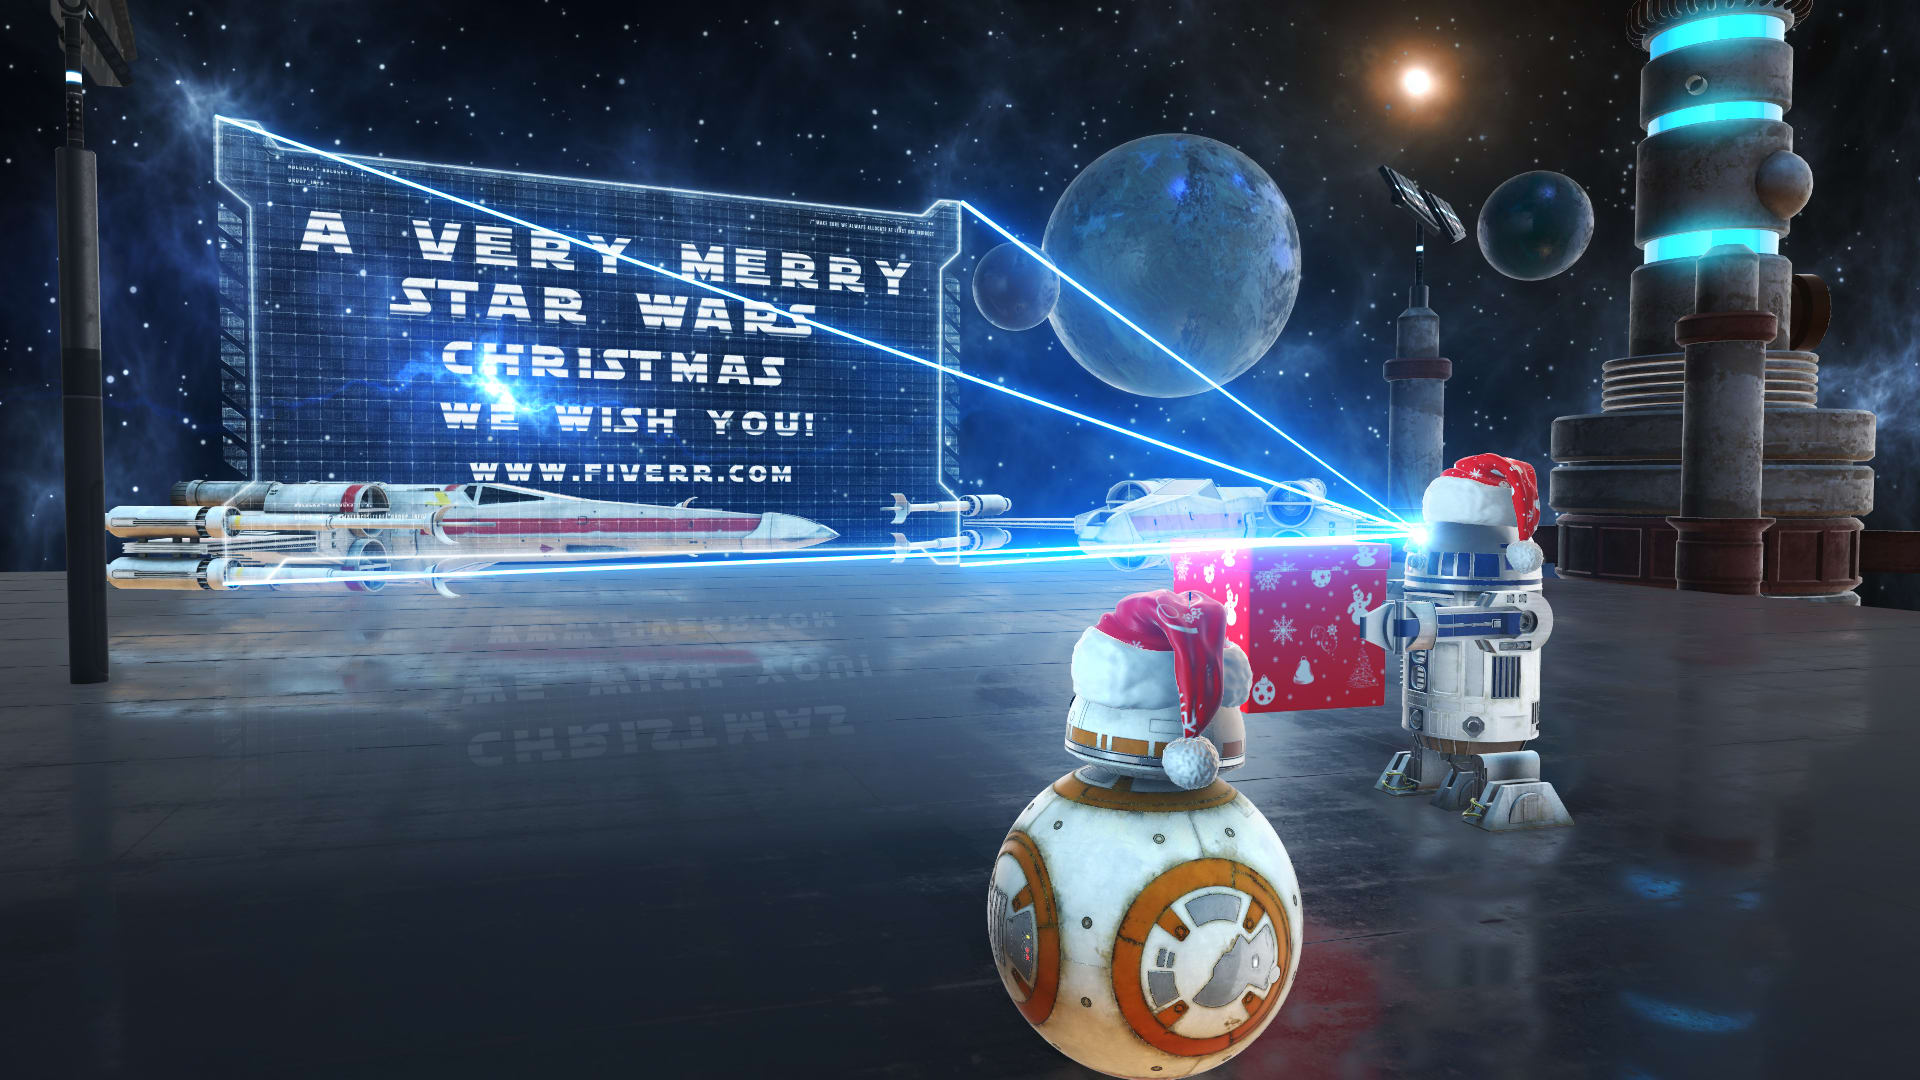 Create this amazing star wars christmas video greeting